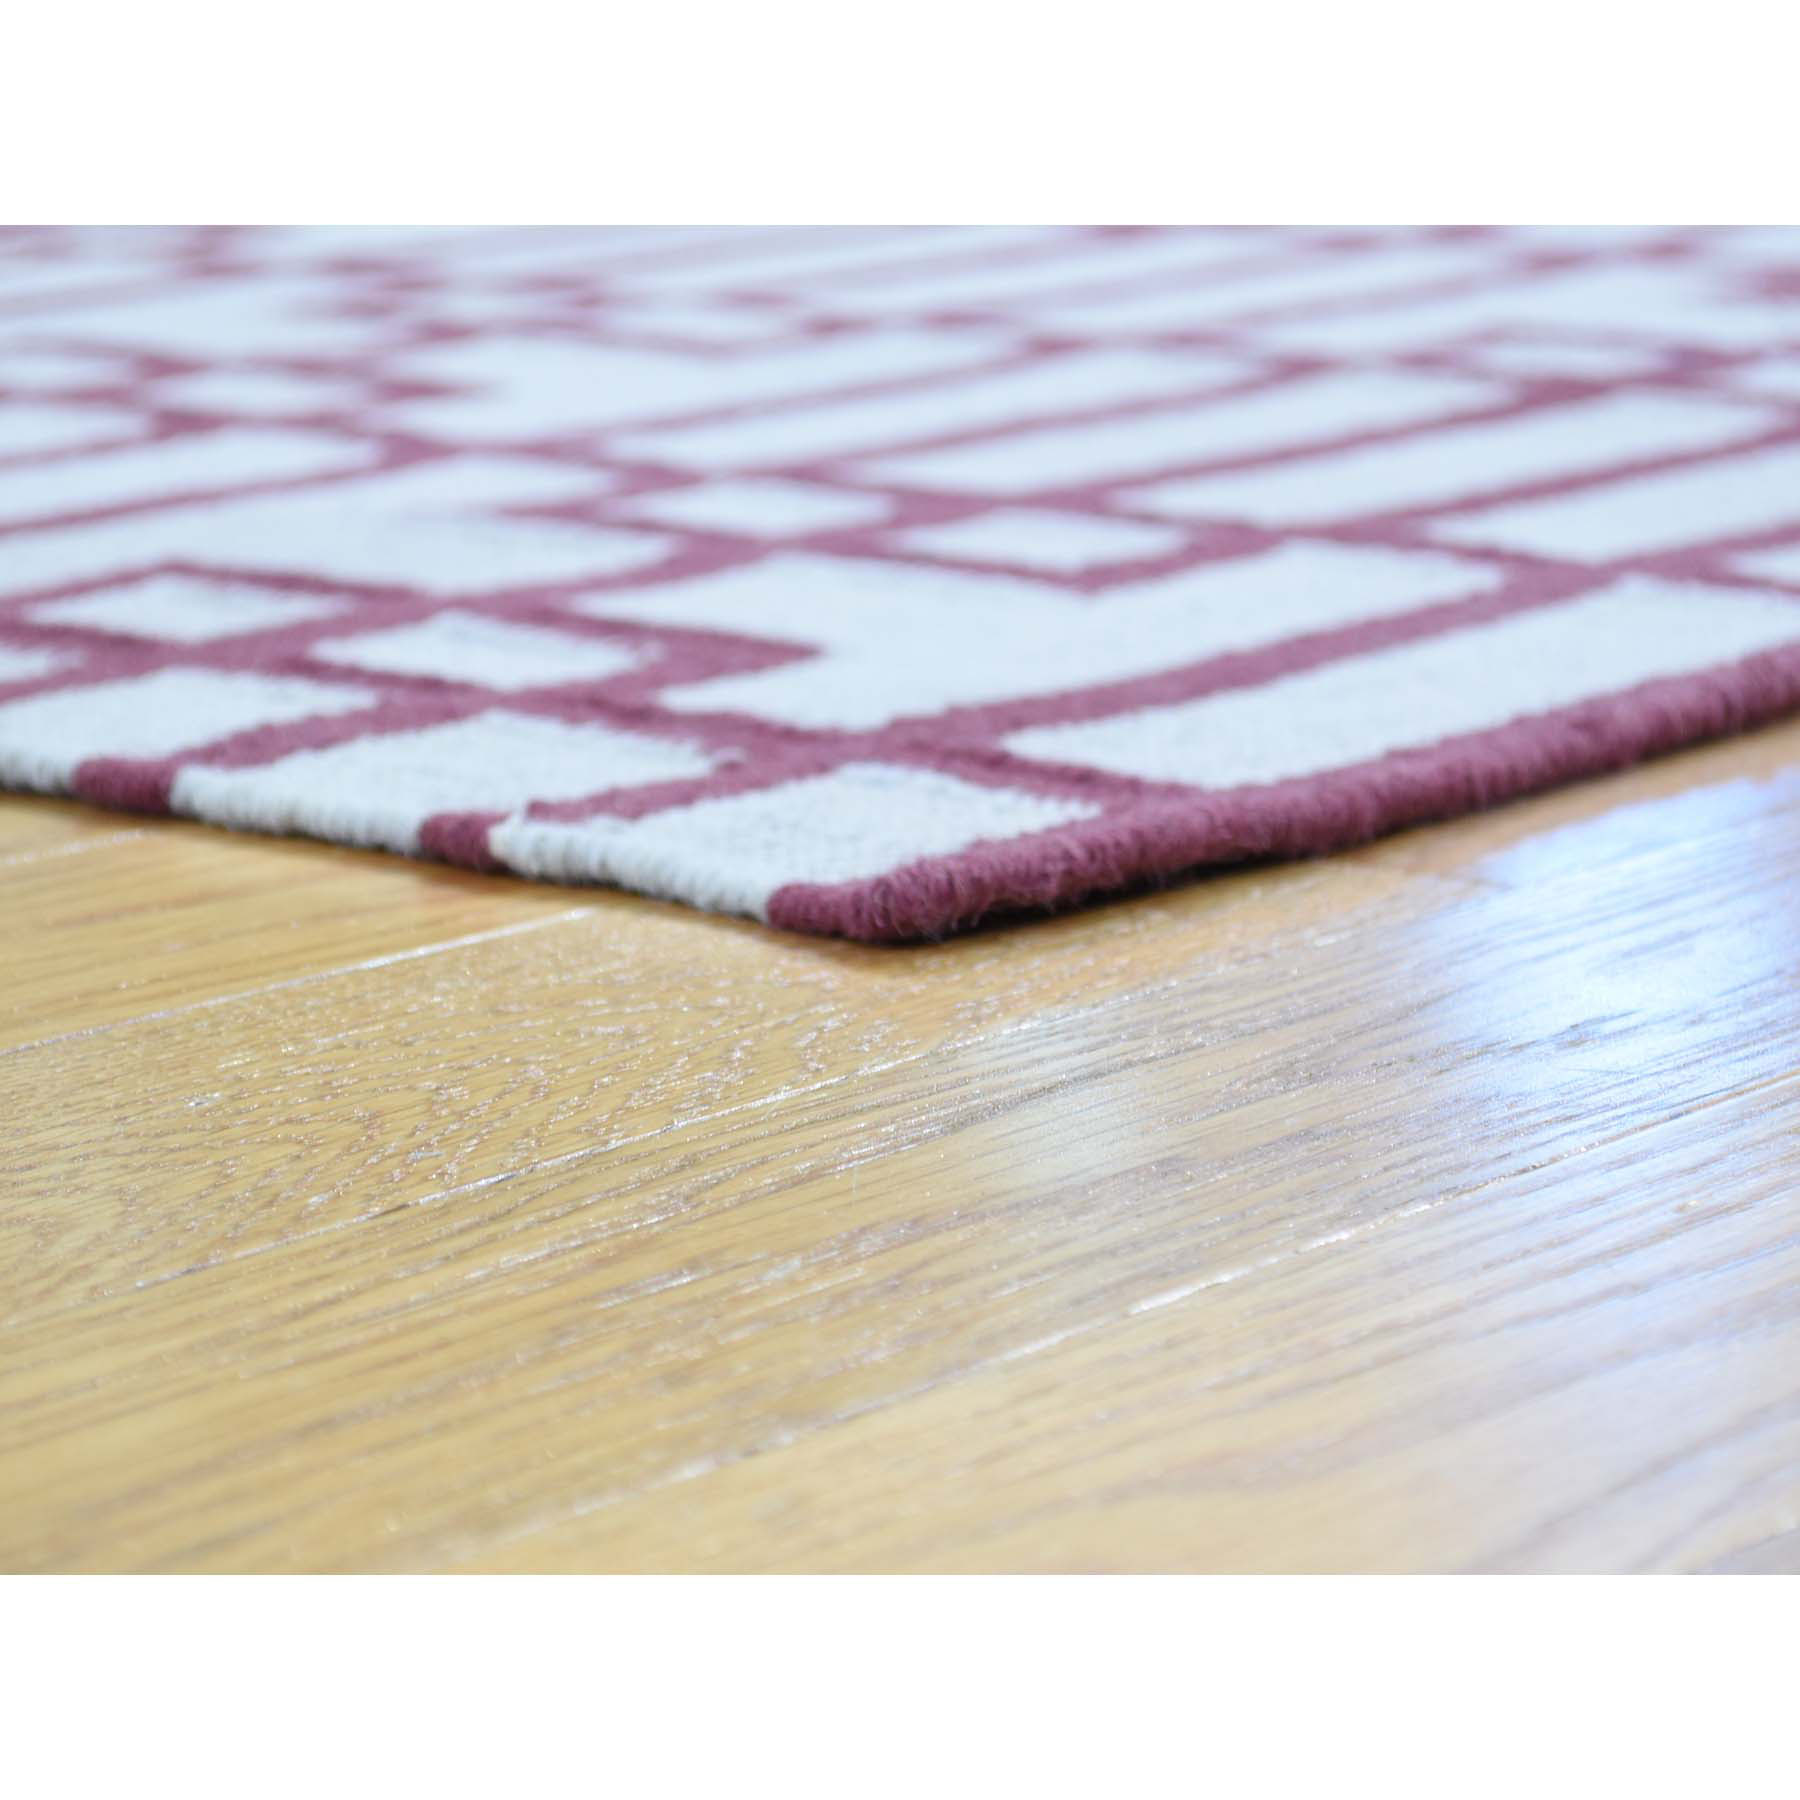 3-x5-4  Geometric Design Flat Weave Hand-Woven Reversible Kilim Carpet 